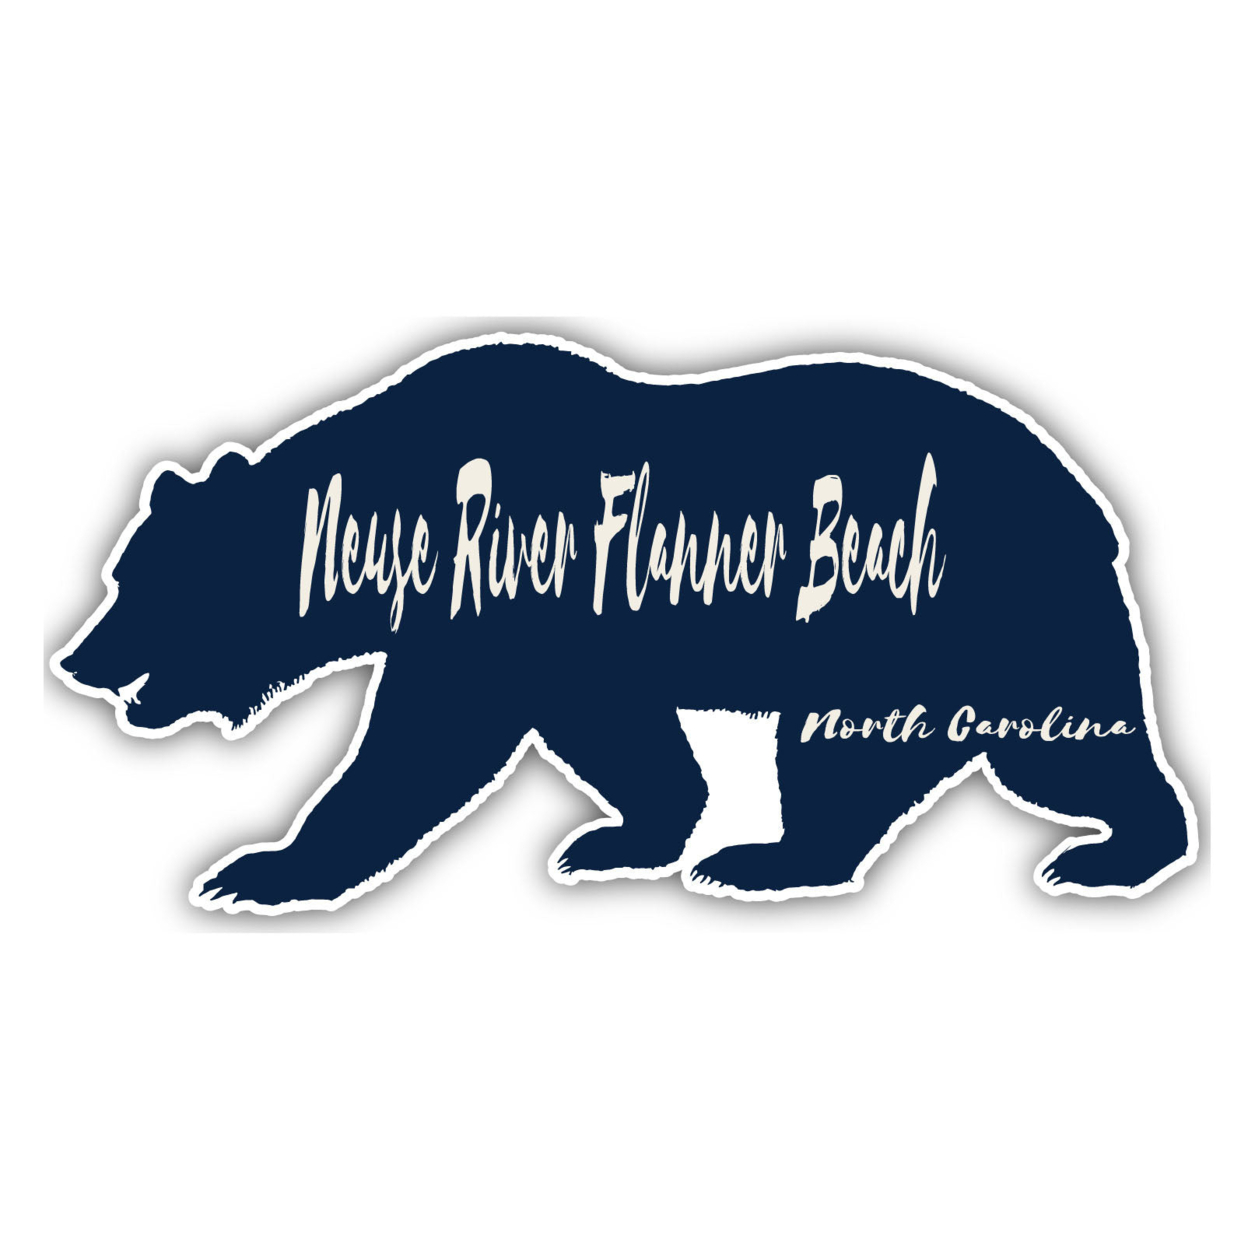 Neuse River Flanner Beach North Carolina Souvenir Decorative Stickers (Choose Theme And Size) - Single Unit, 4-Inch, Bear